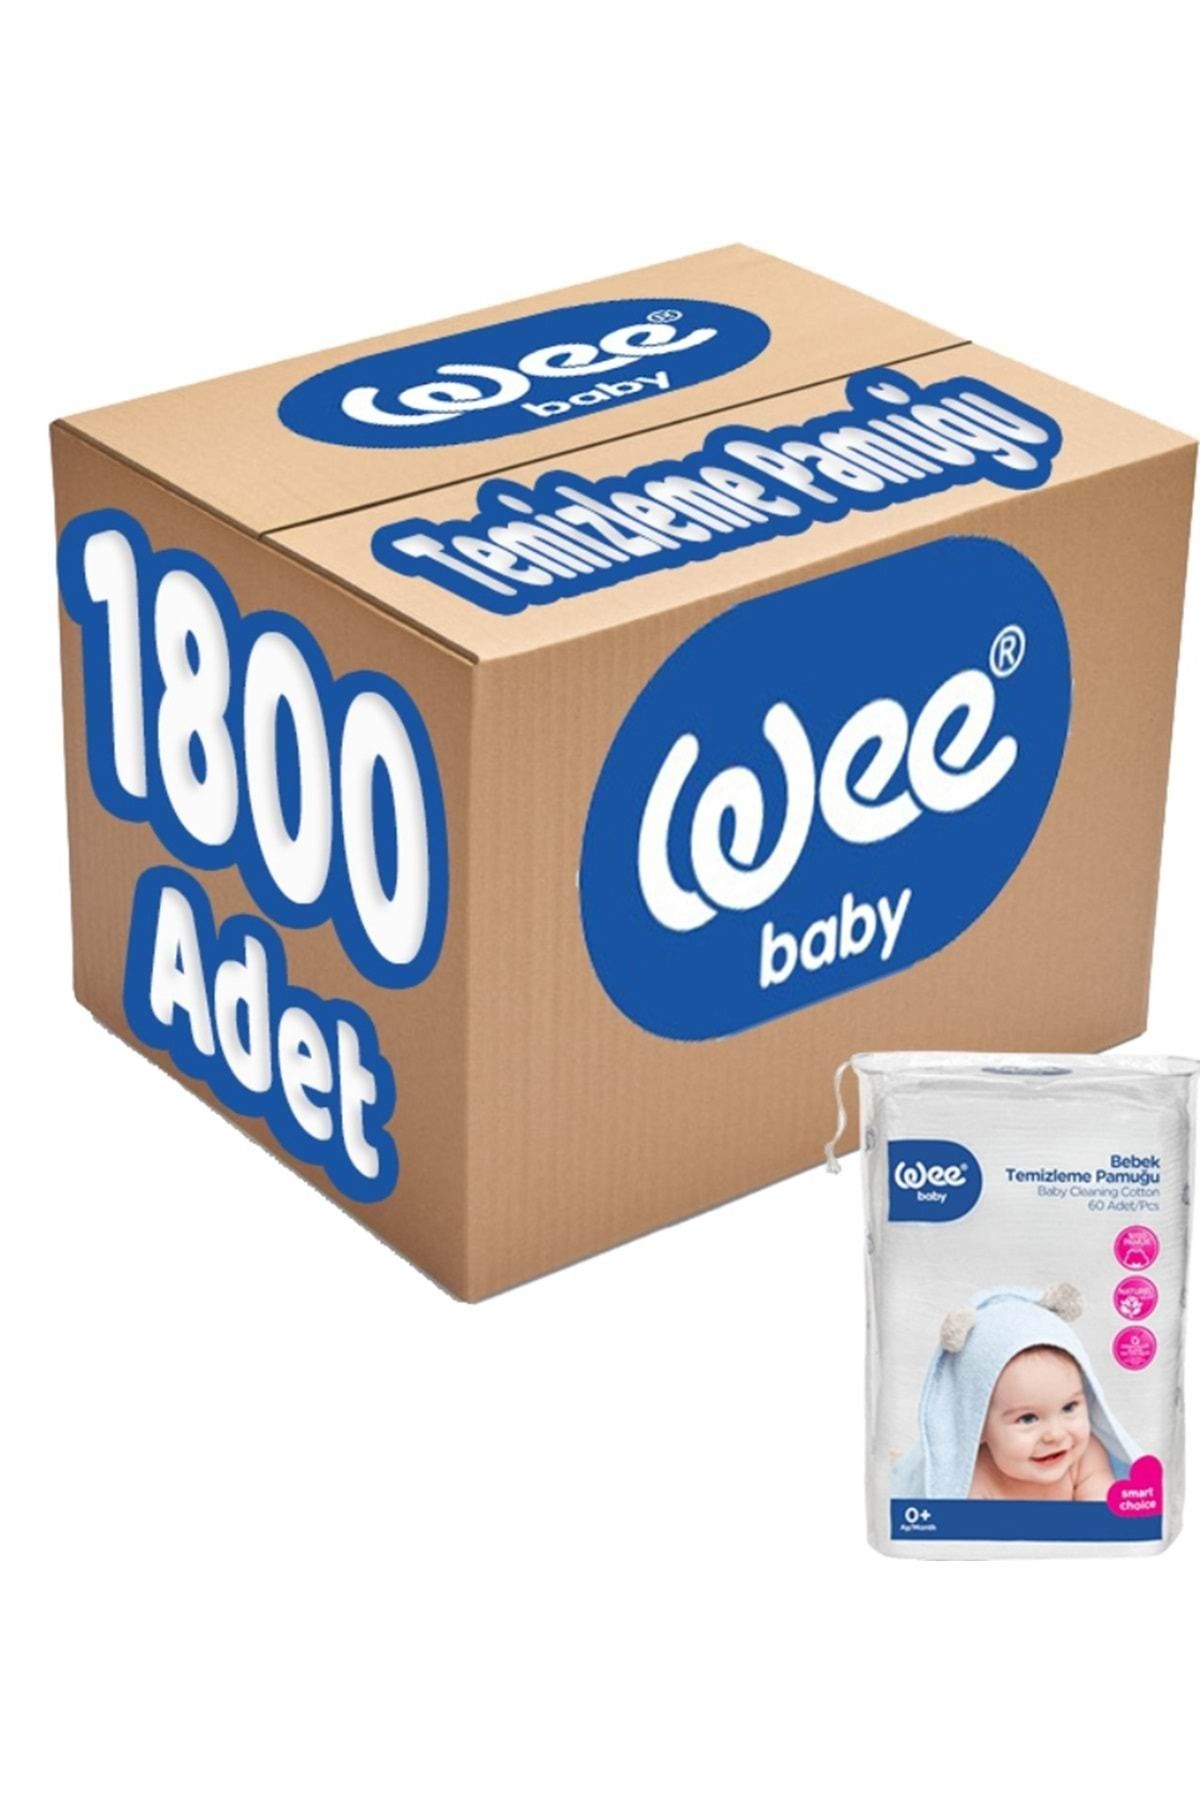 Wee Baby Bebek Temizleme Pamuğu 1800 Adet (30pk*60)